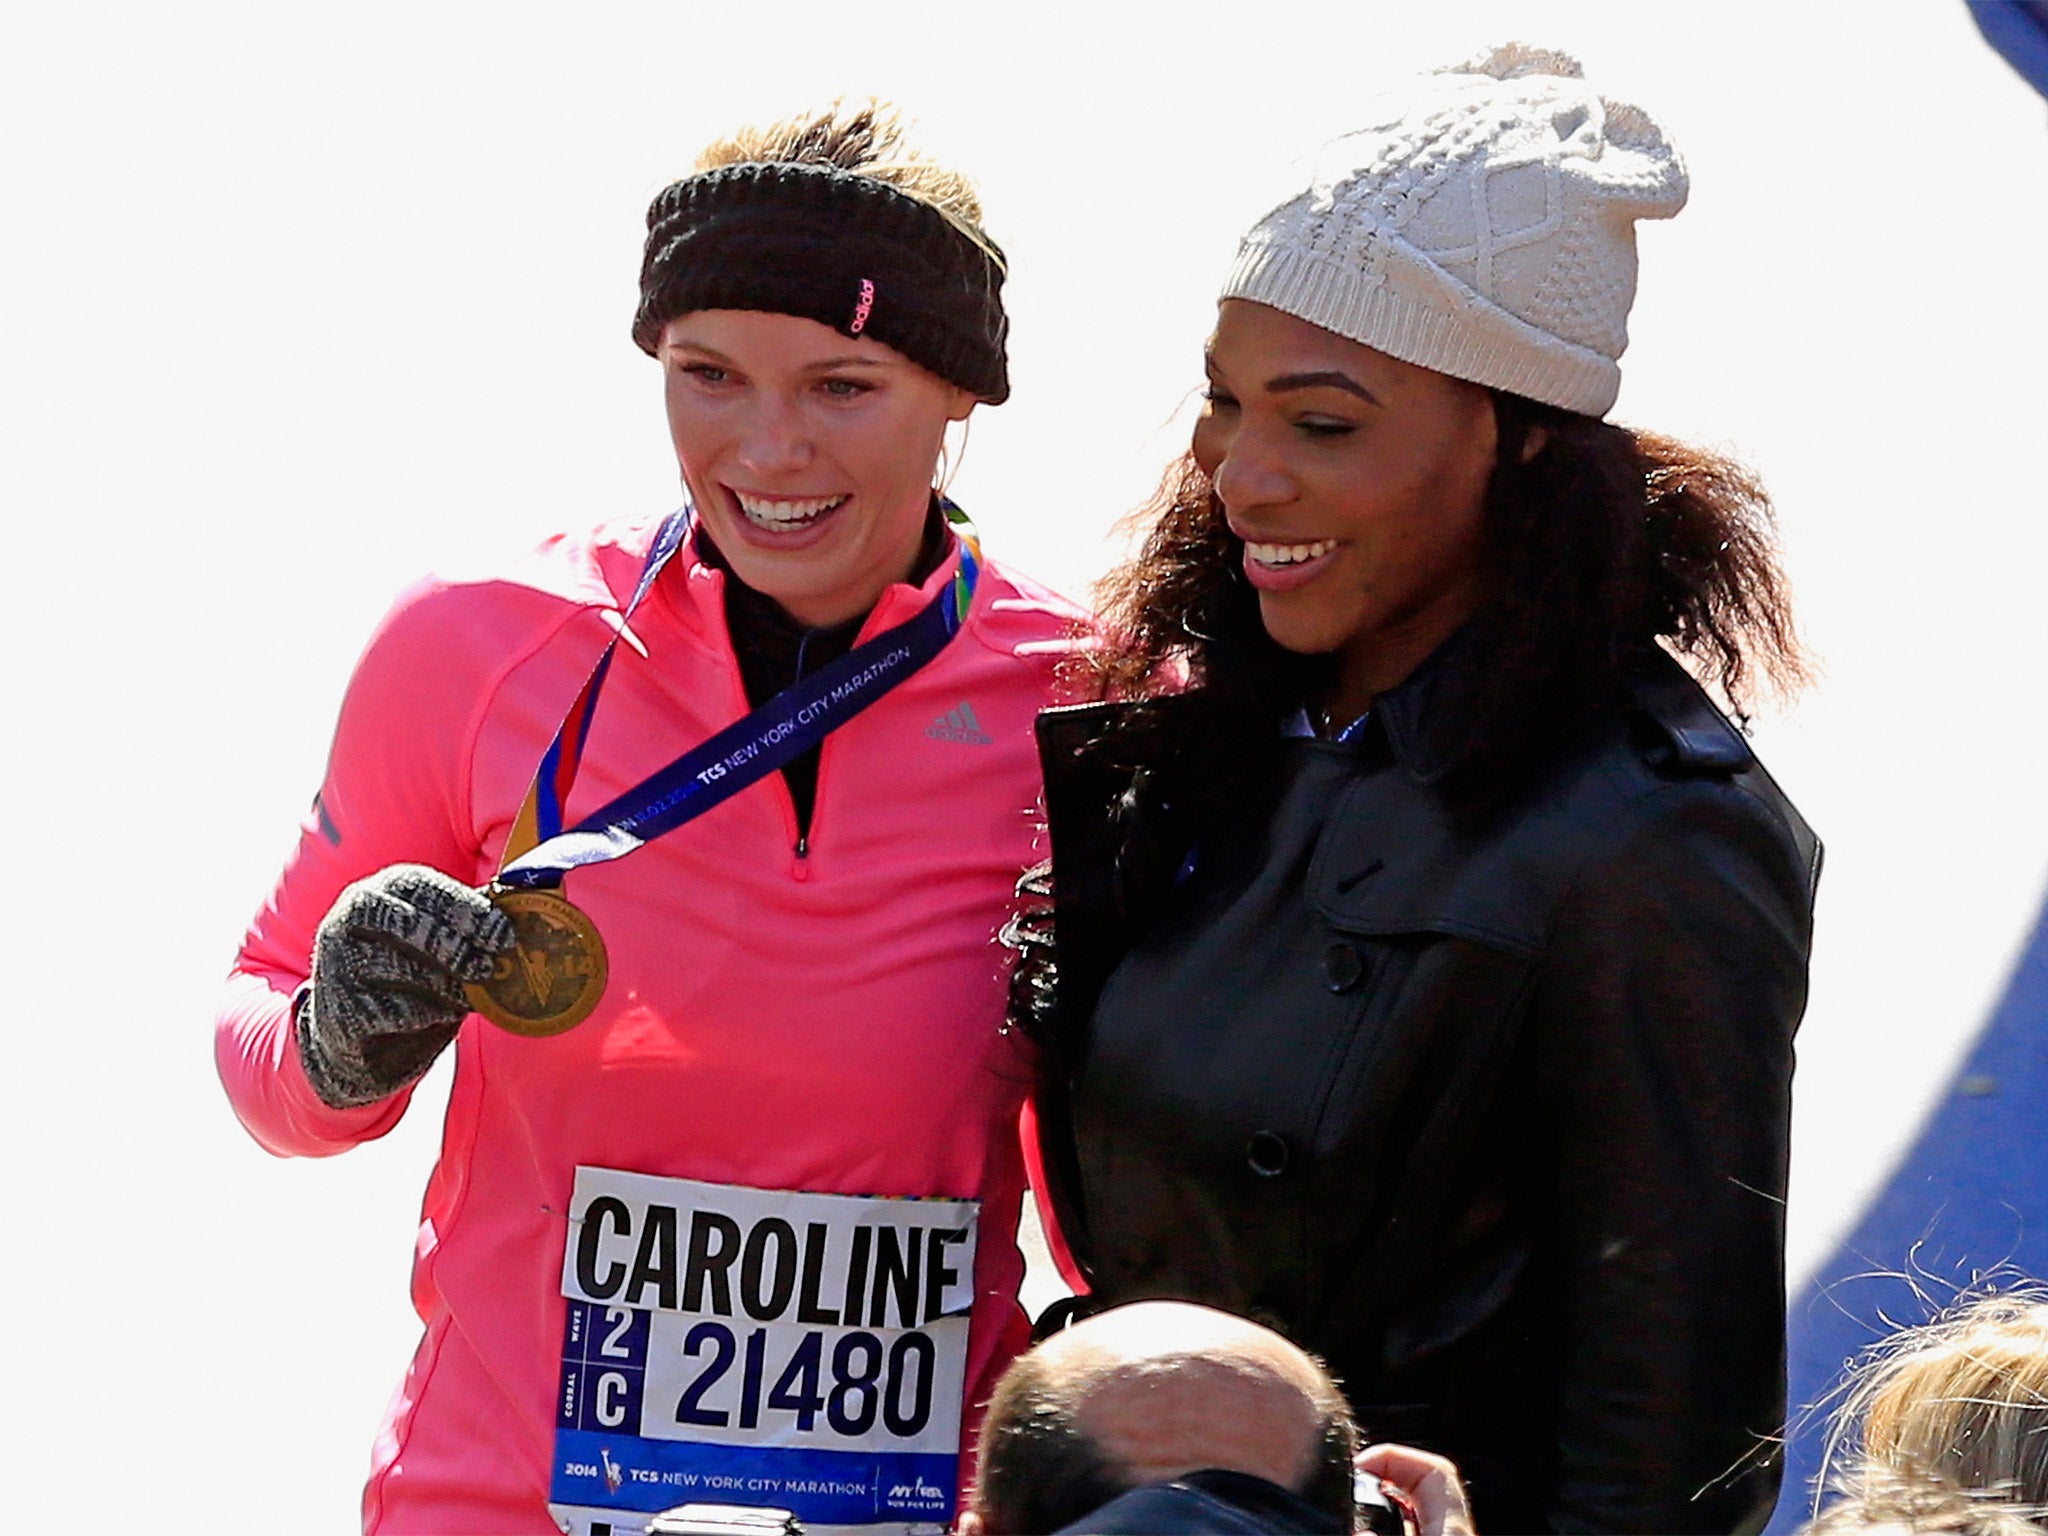 Wozniacki with friend Serena Williams after finishing last year’s New York Marathon